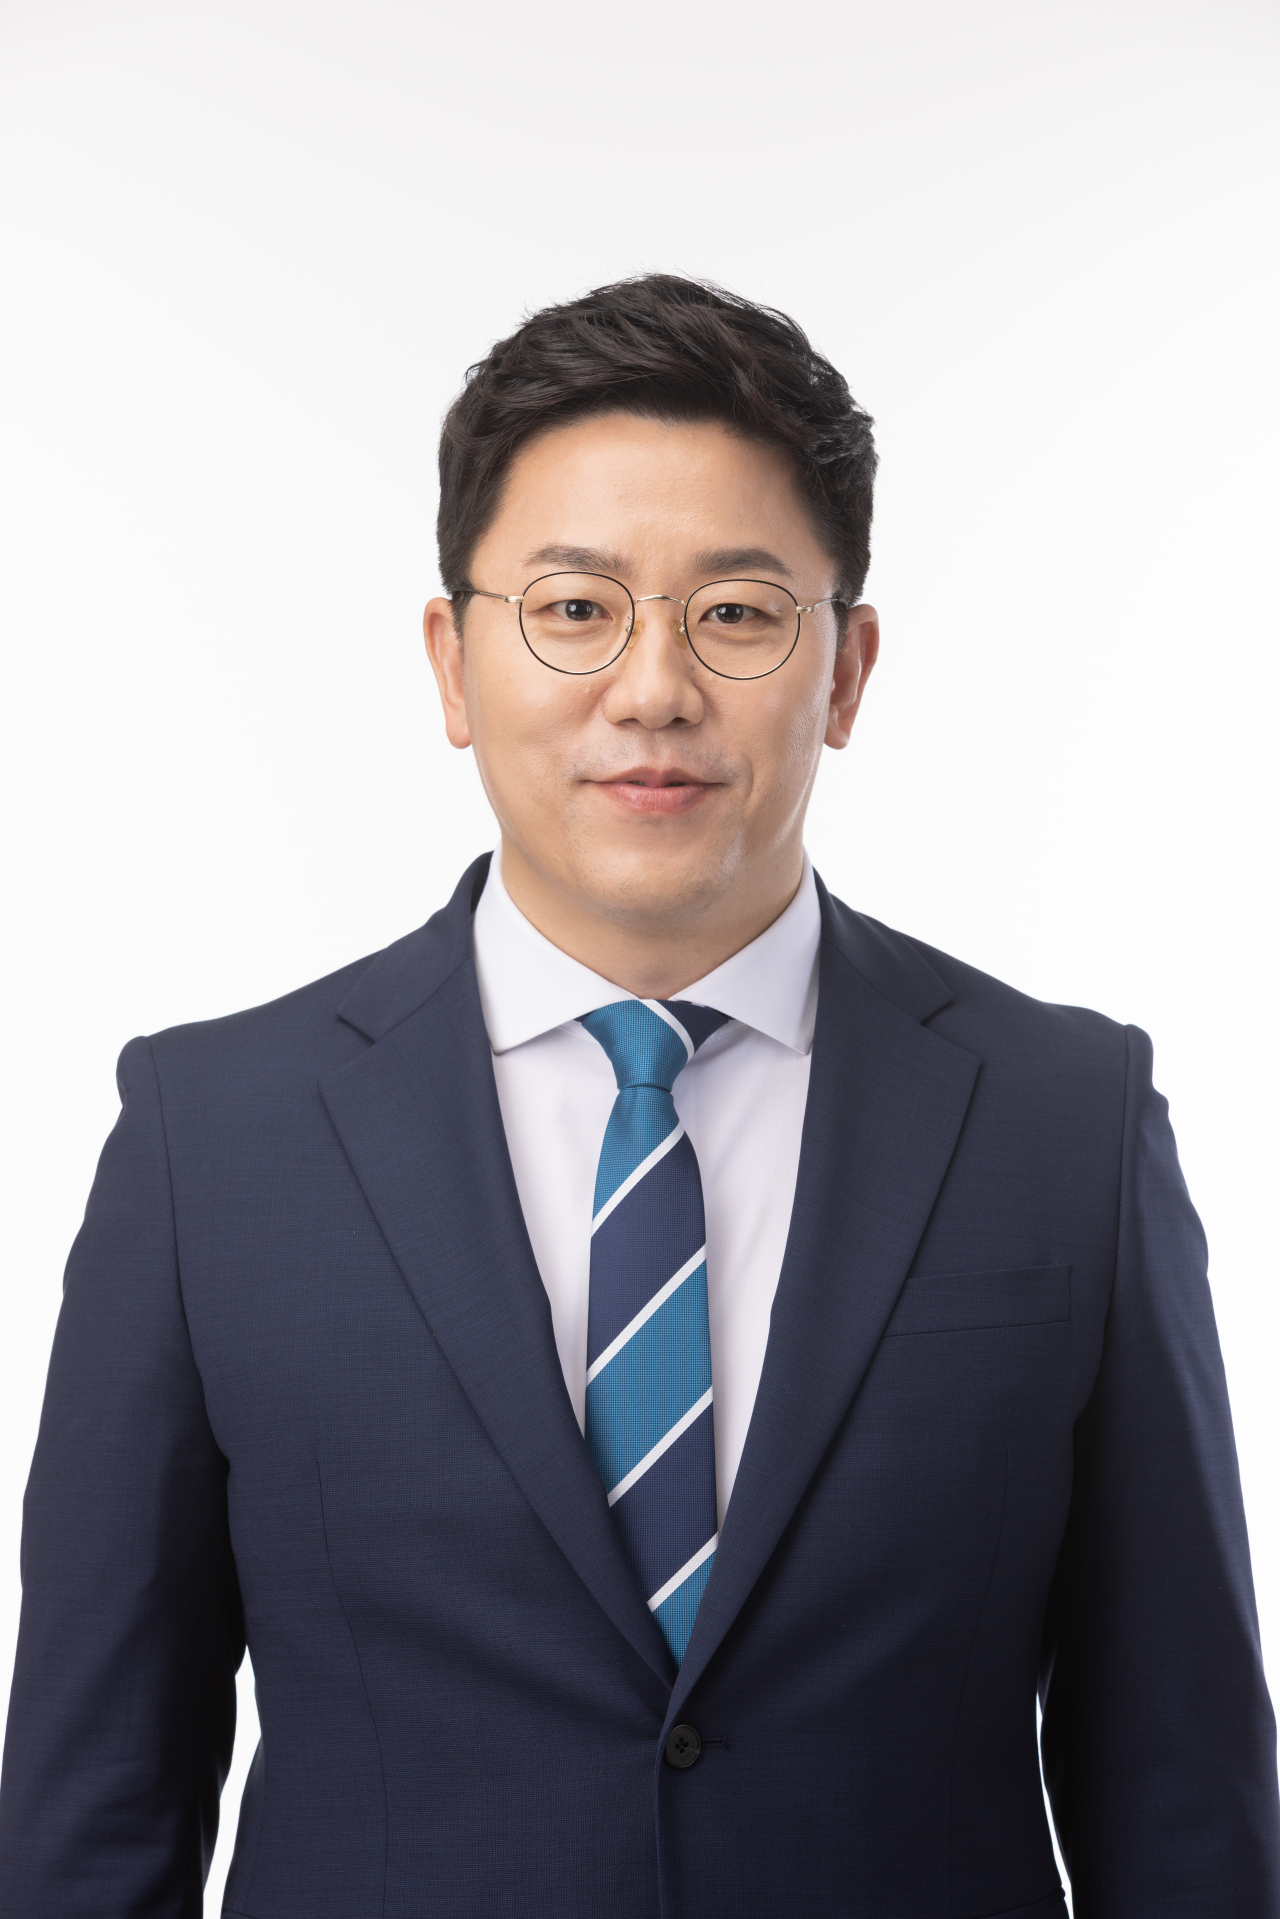 Han Ki-young, director of the Policy Design Center at Seokyeong University